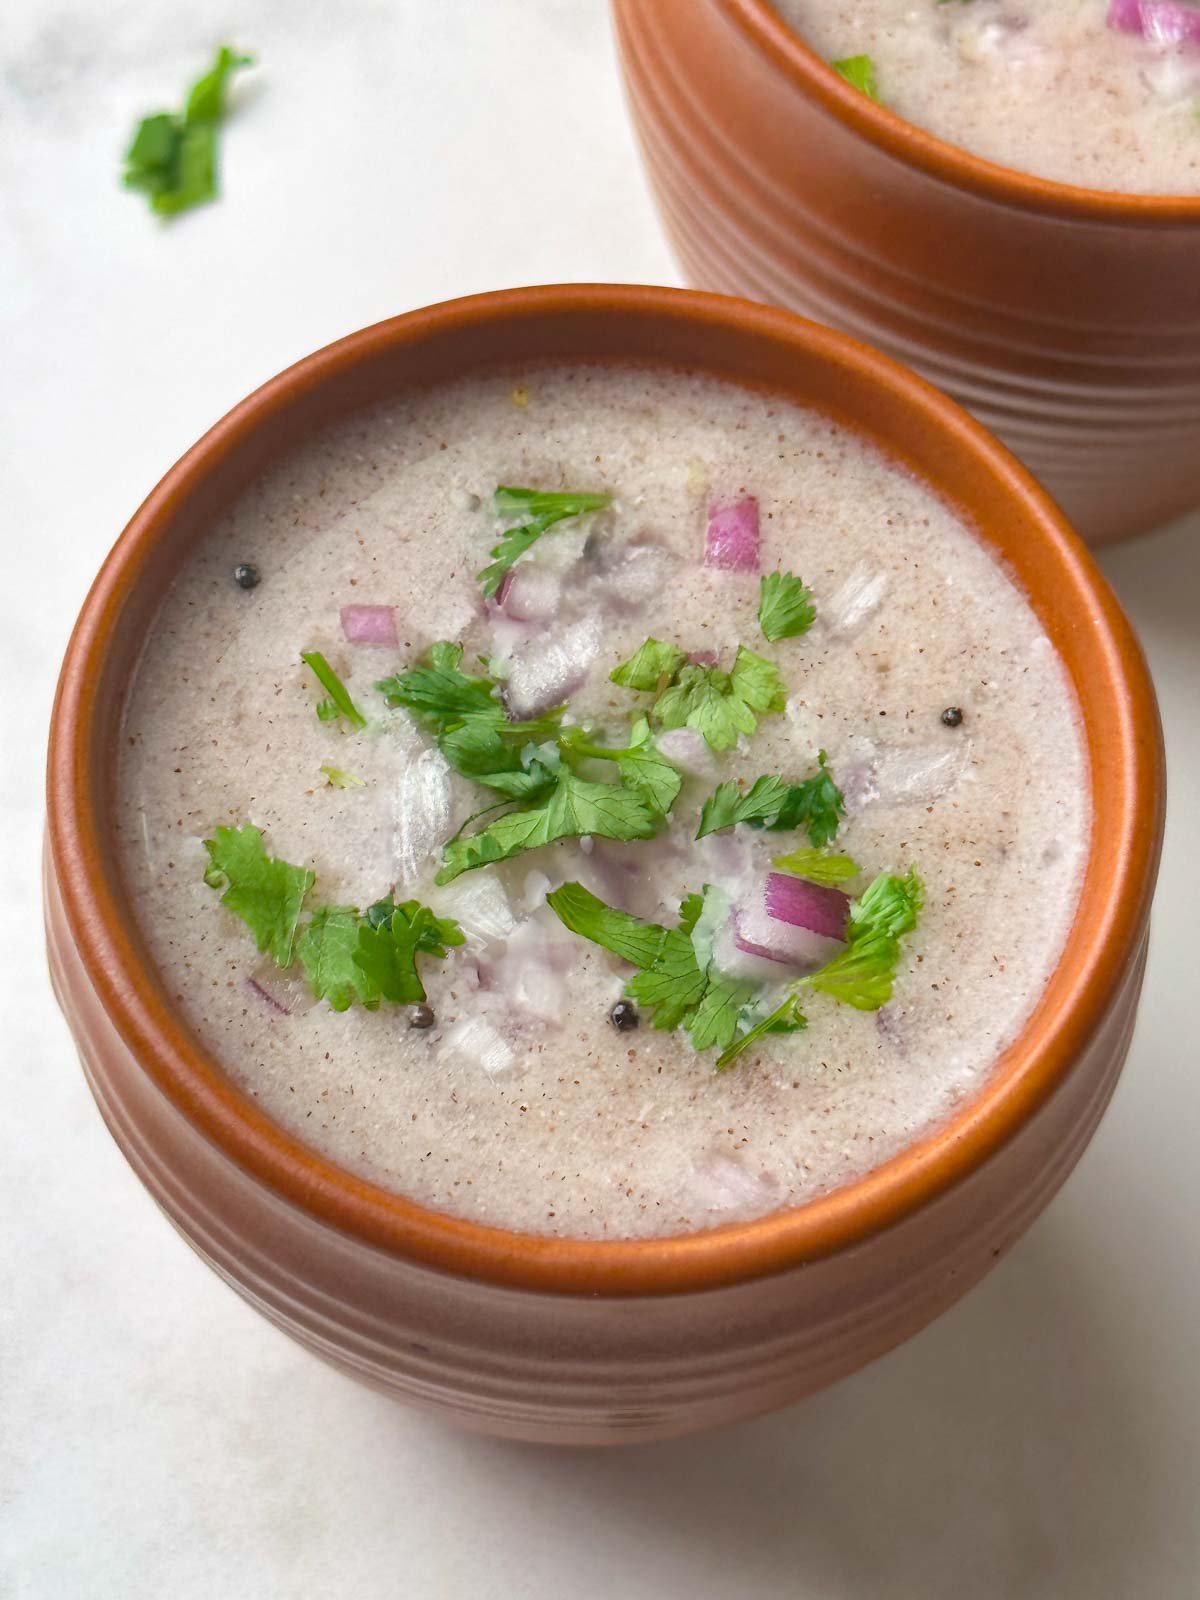 ragi ambali (ragi ganji) served in bowls with coriander and onion on the side